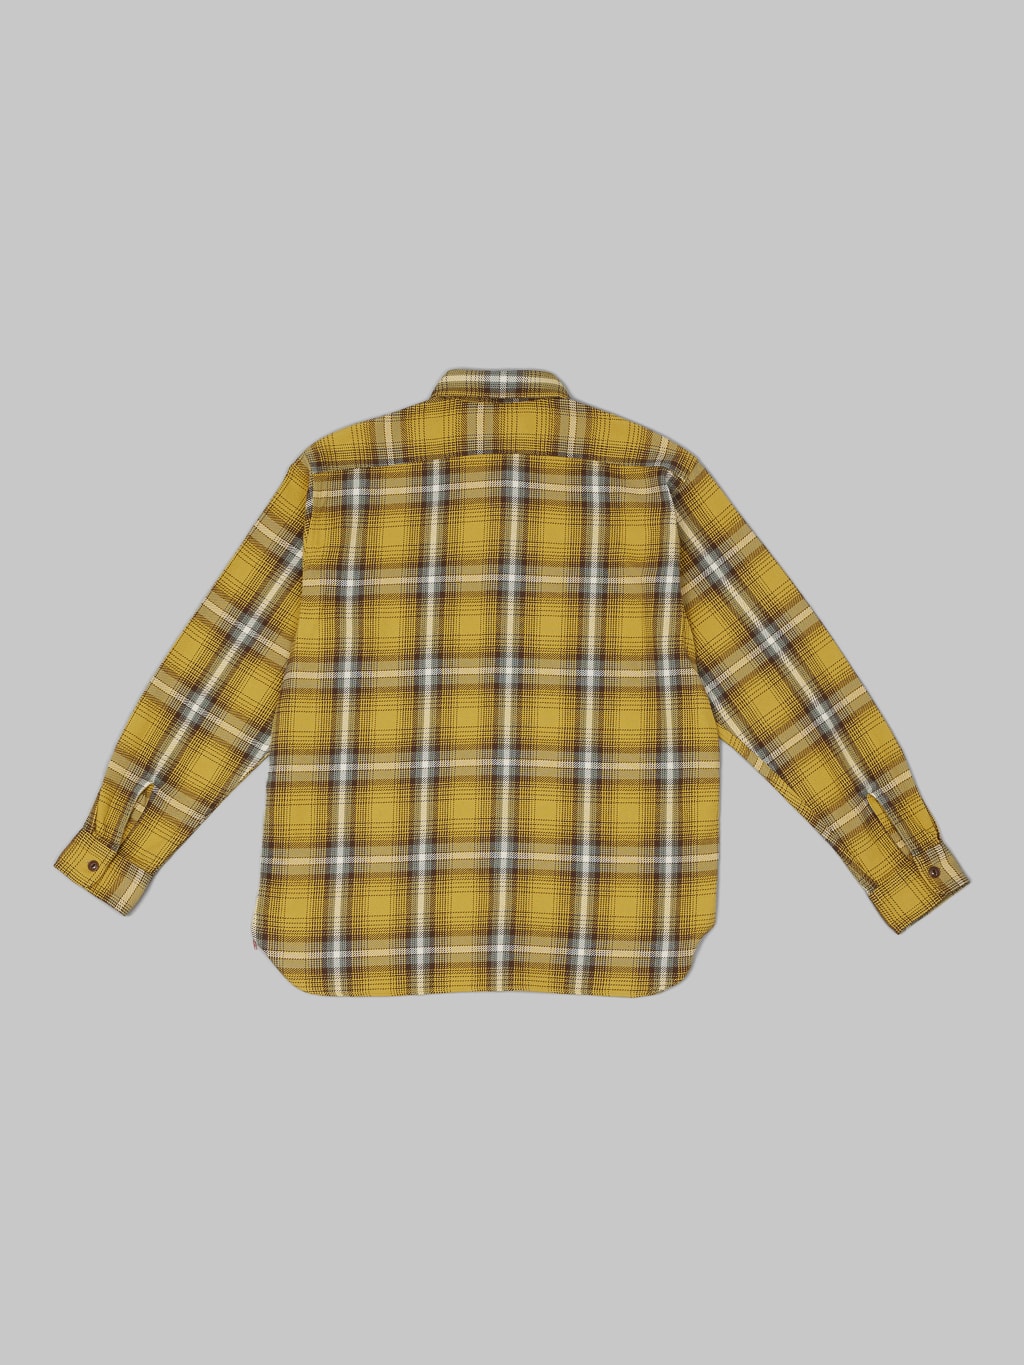 sugar cane twill check work shirt flannel yellow back